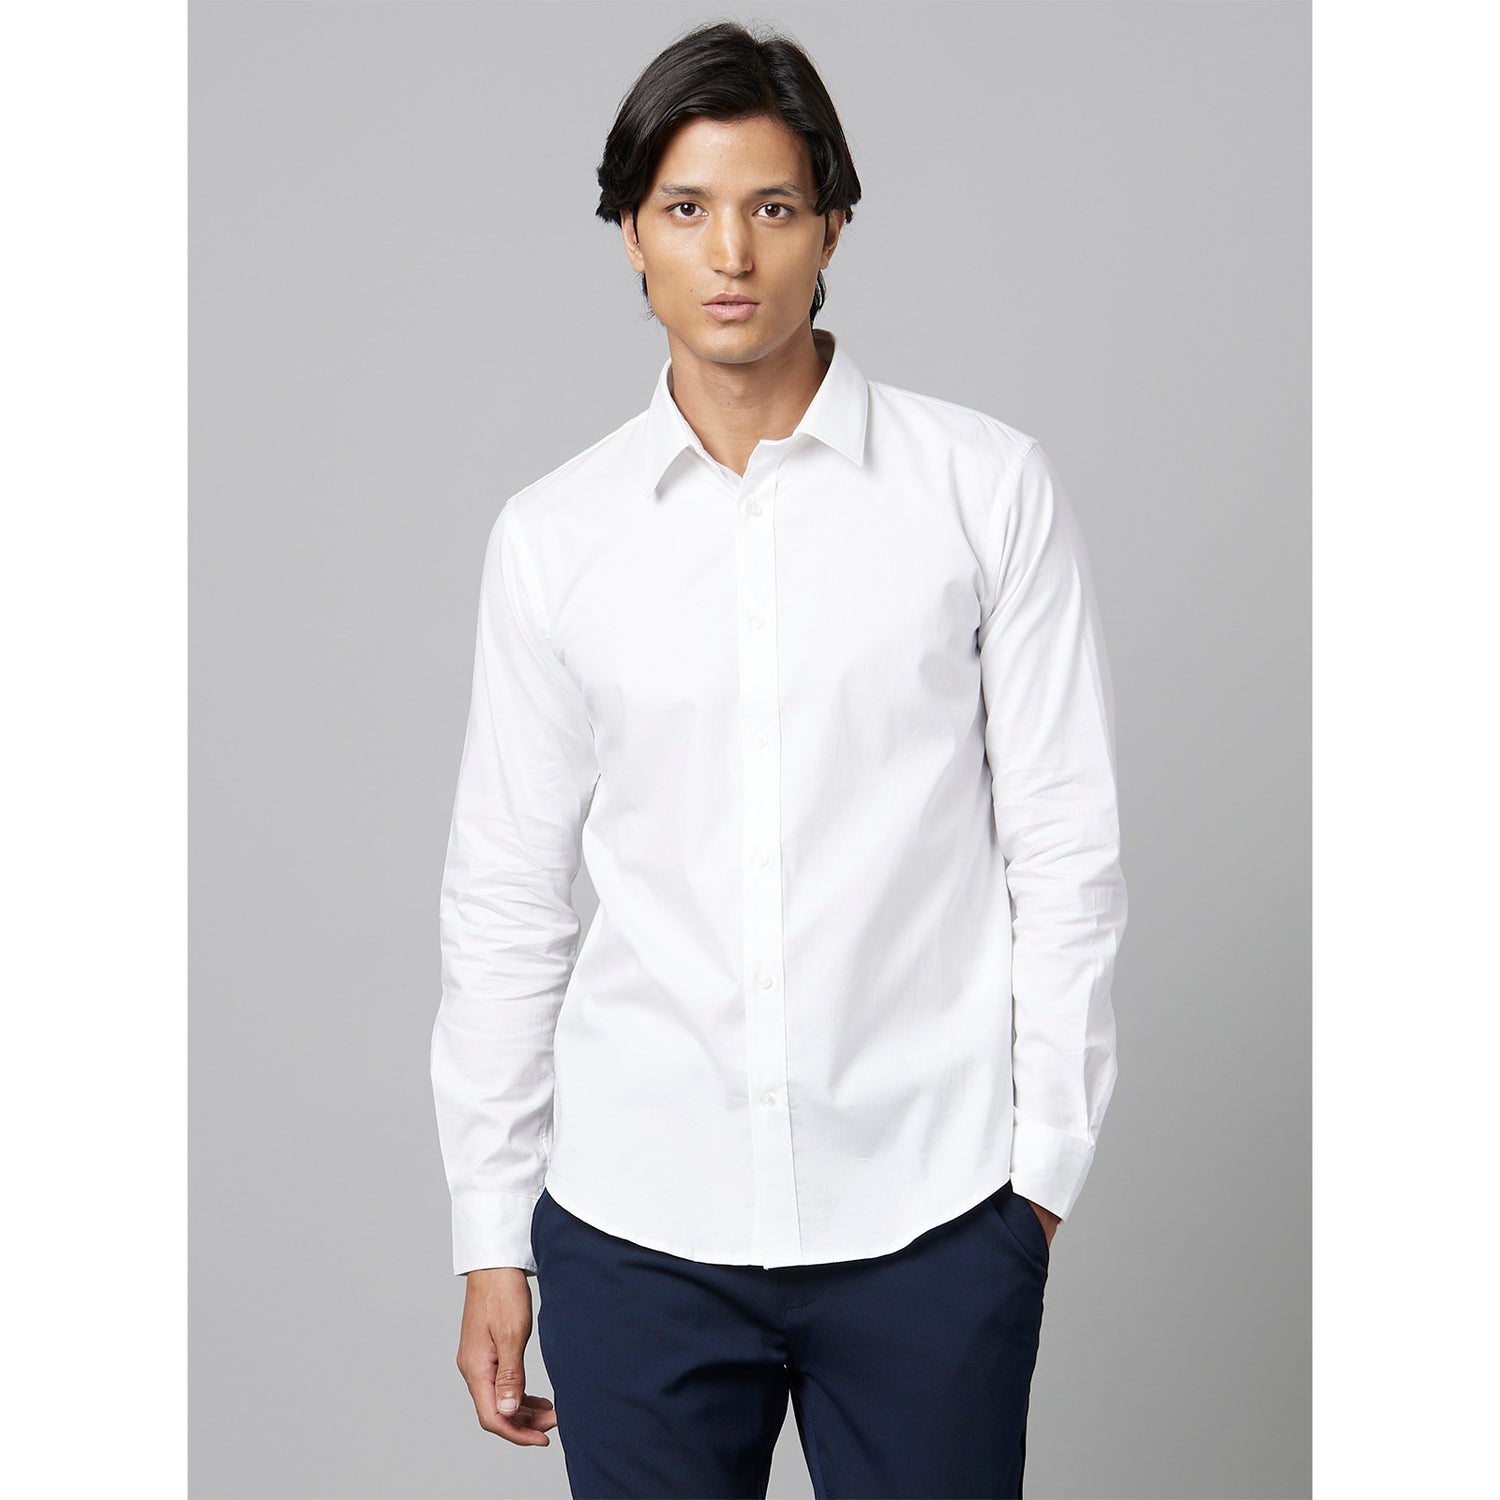 White Classic Formal Cotton Shirt (MASANTAL6)